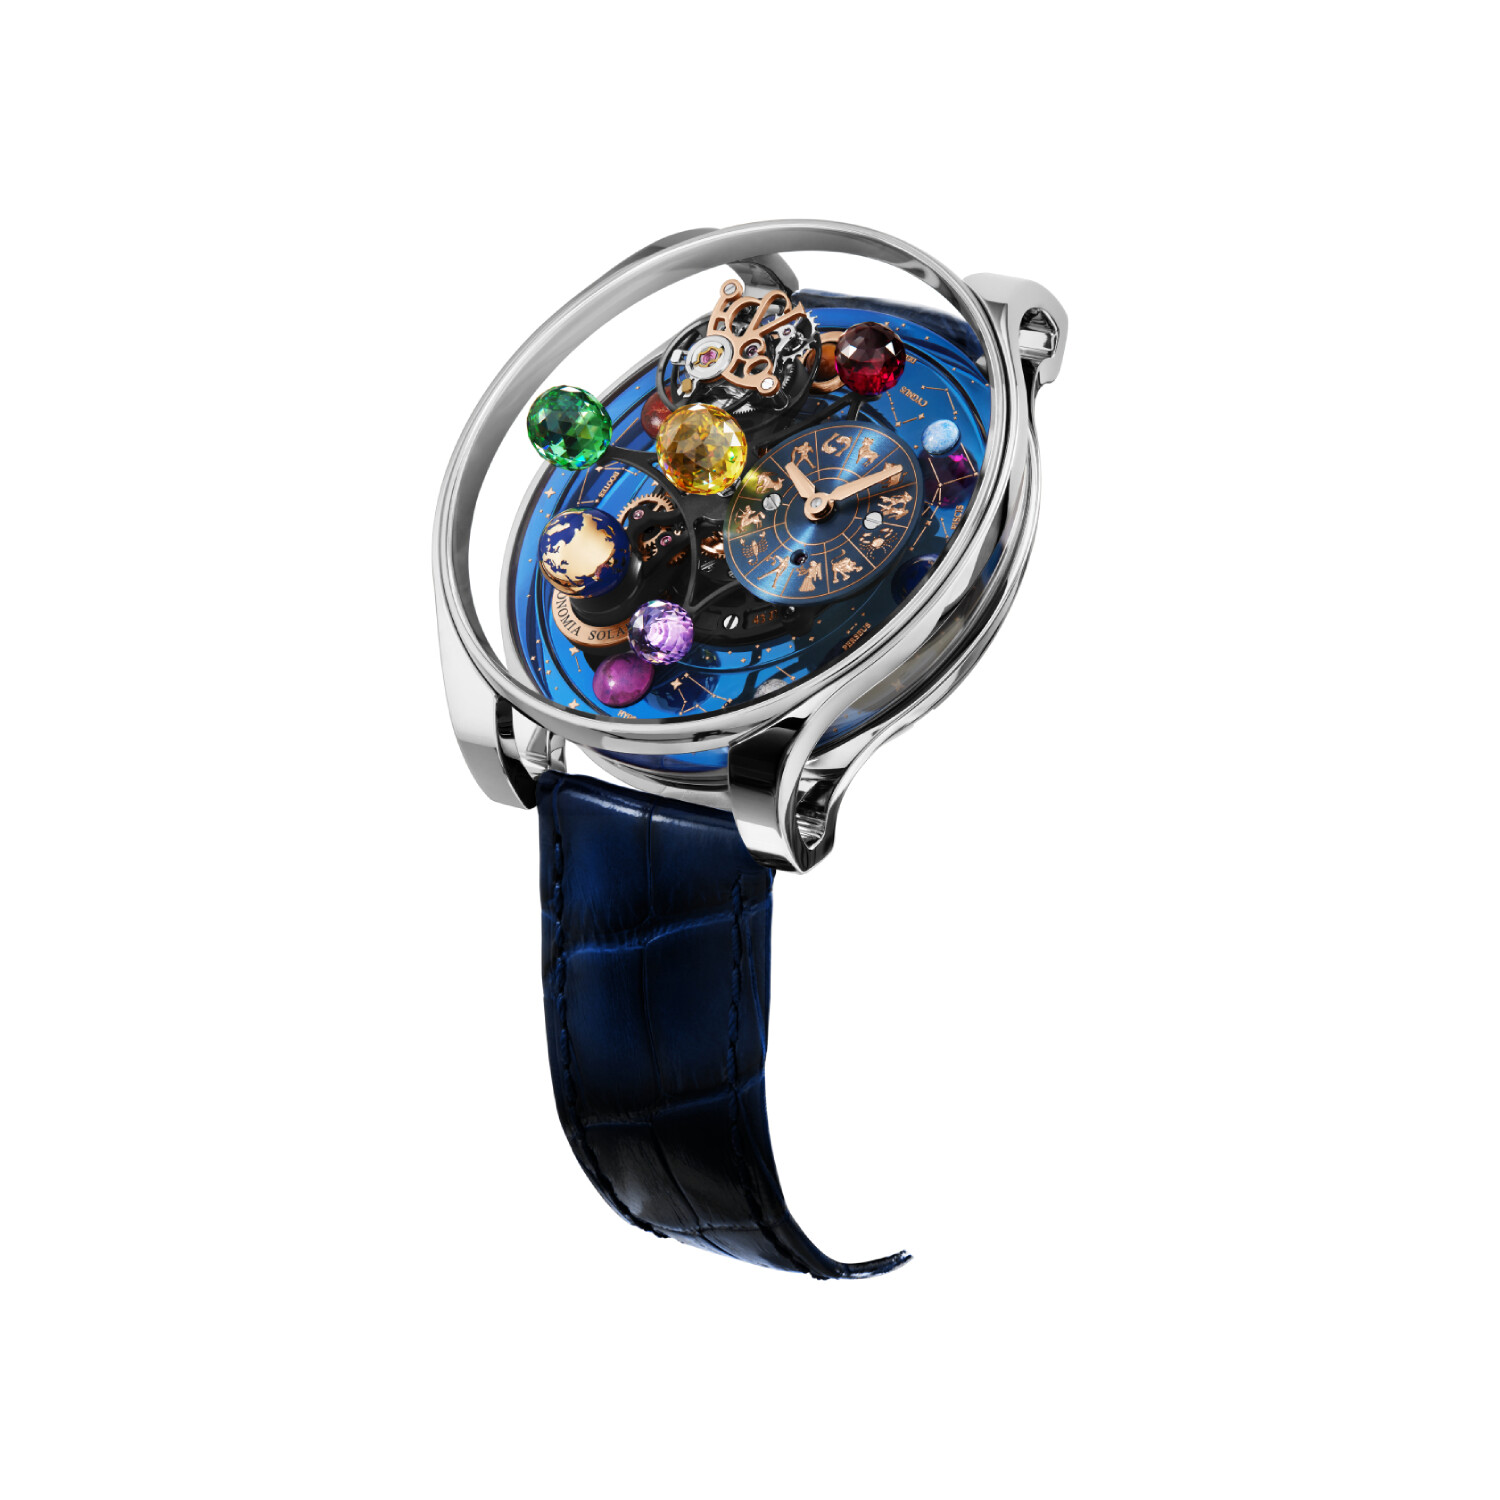 jacob and co astronomia replica watch – Compra jacob and co astronomia  replica watch con envío gratis en AliExpress version